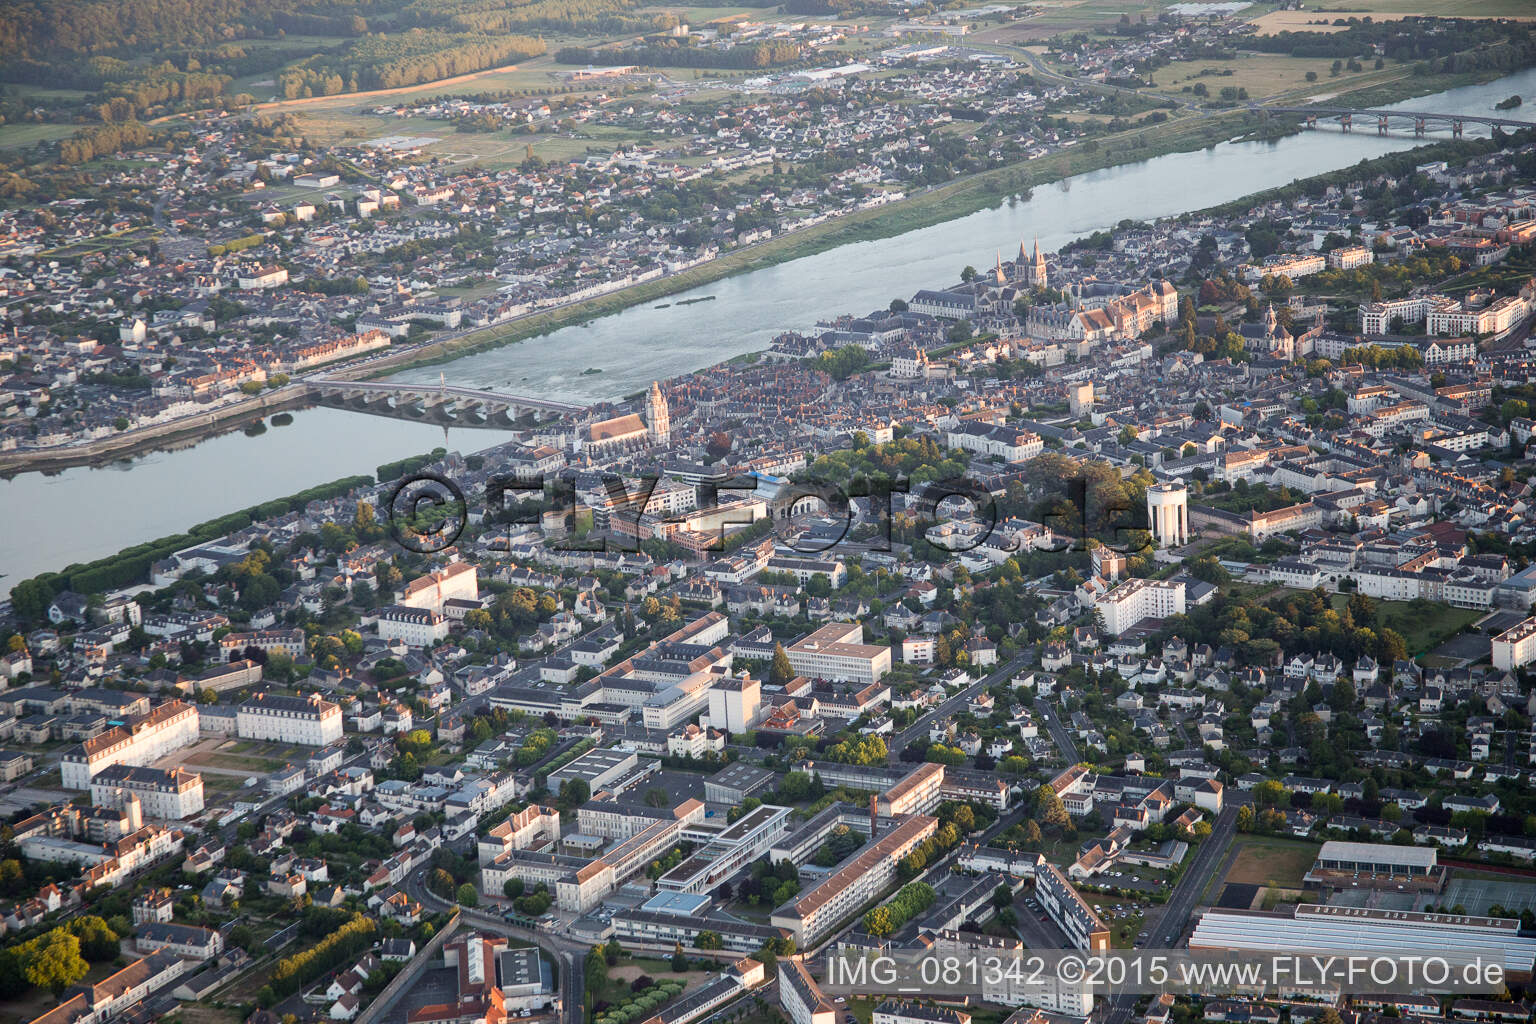 Oblique view of Blois in the state Loir et Cher, France